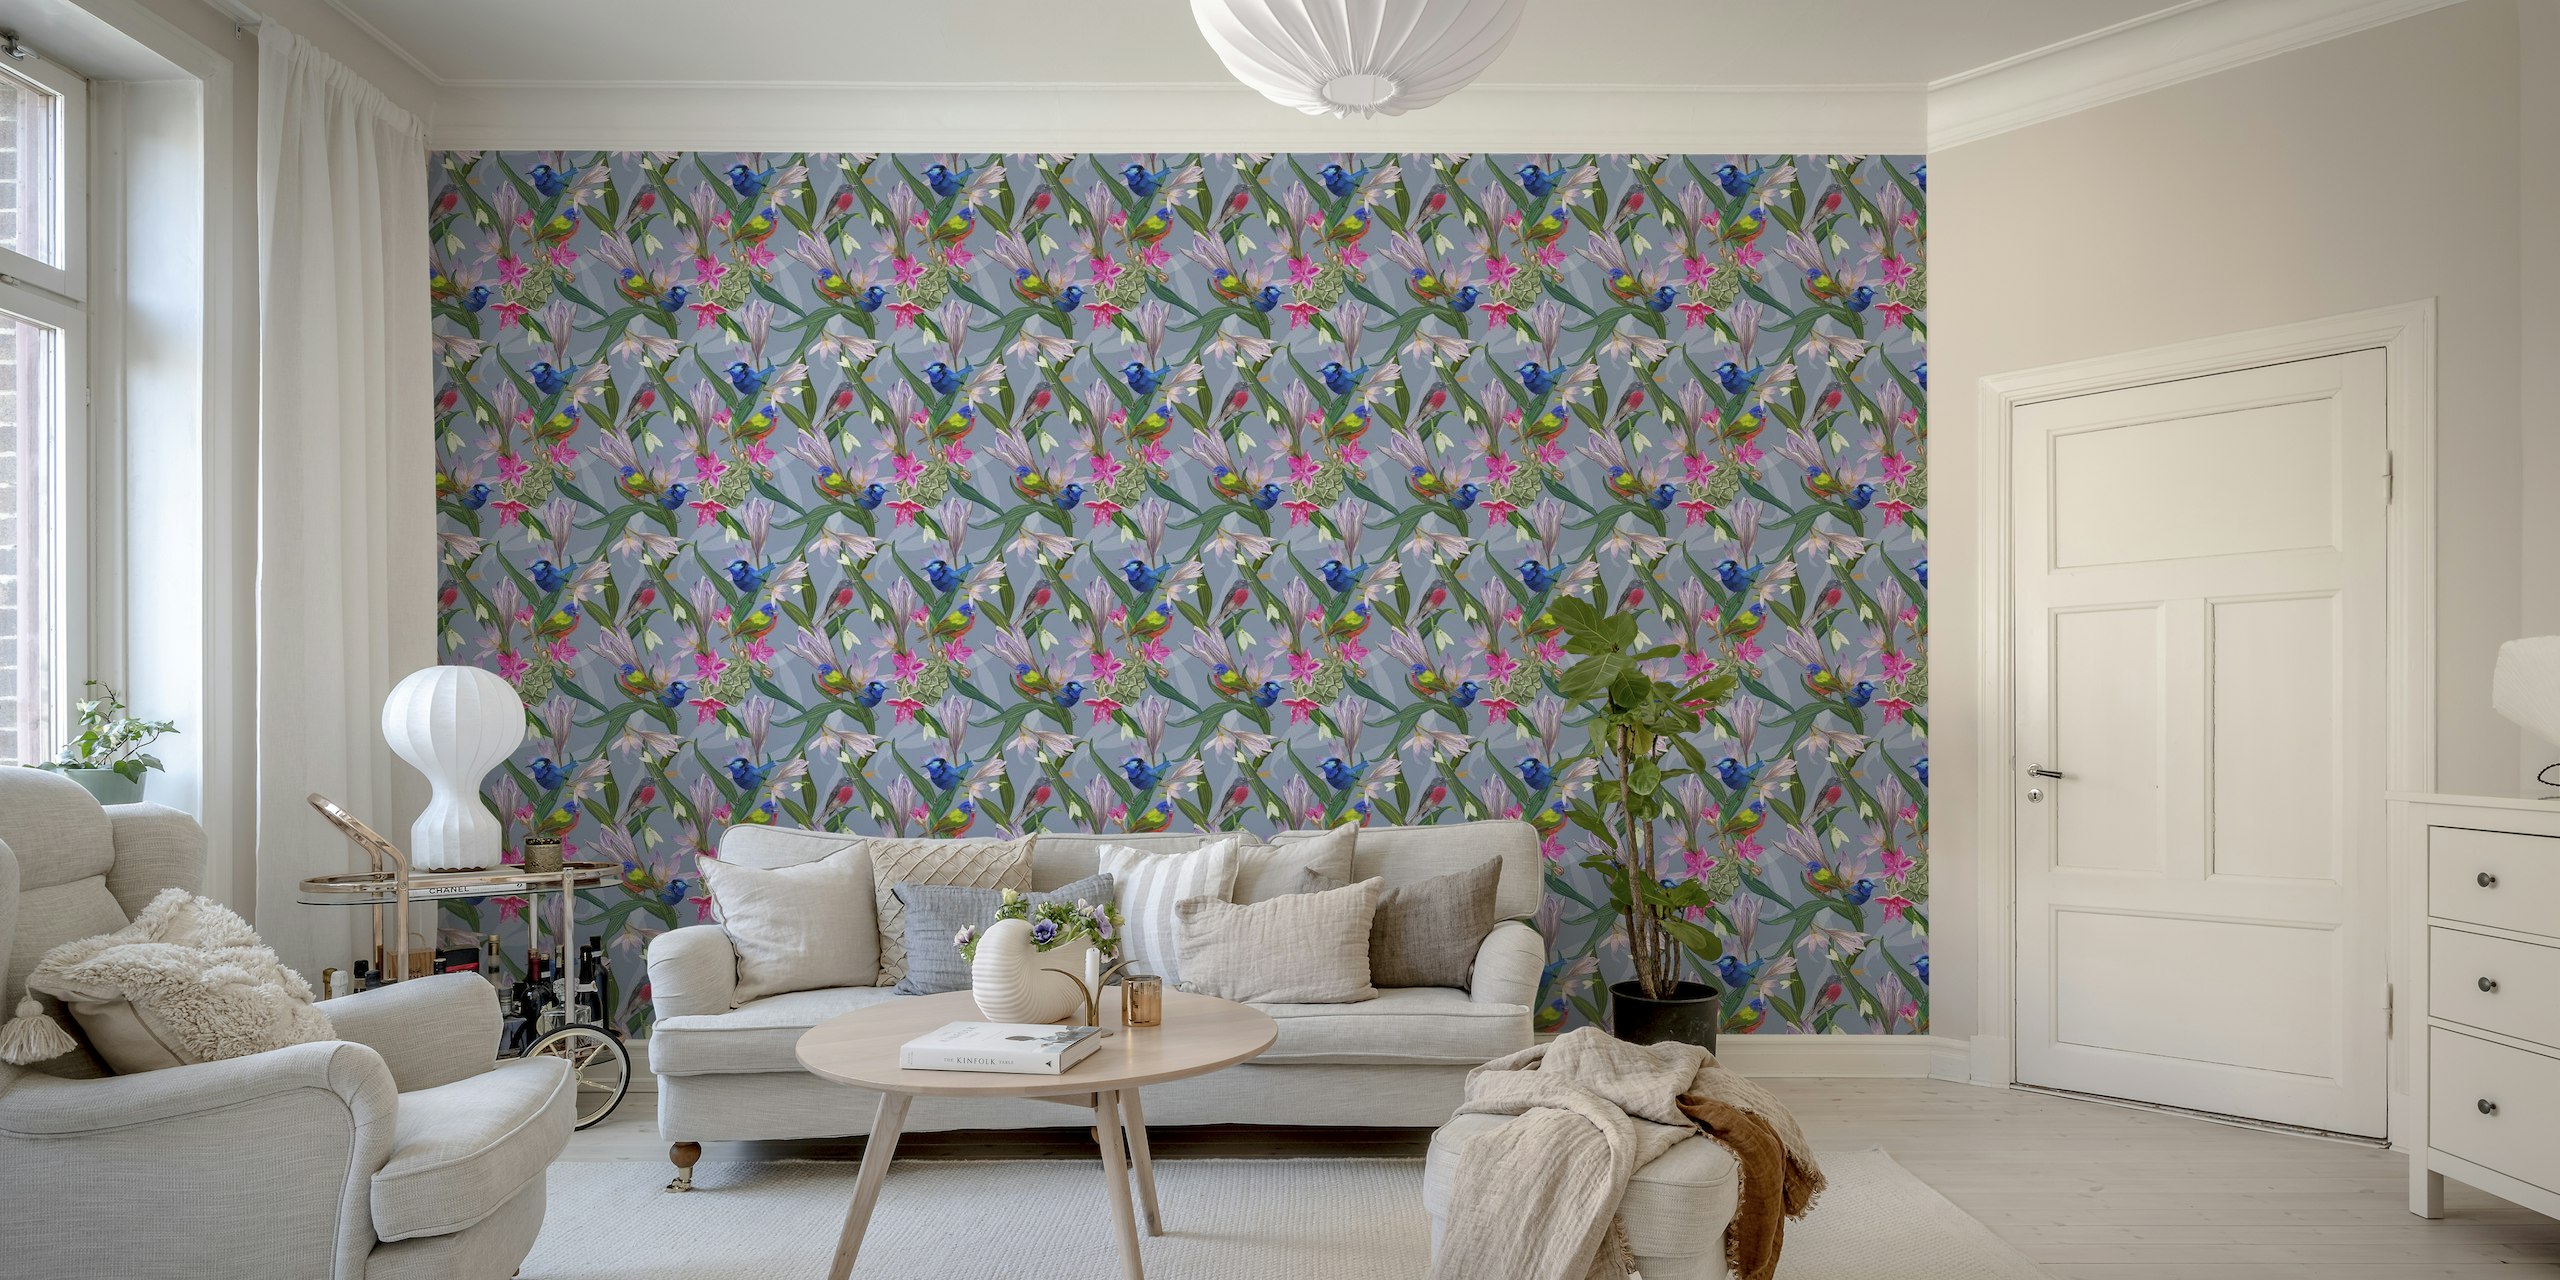 Lovely birds pattern wallpaper